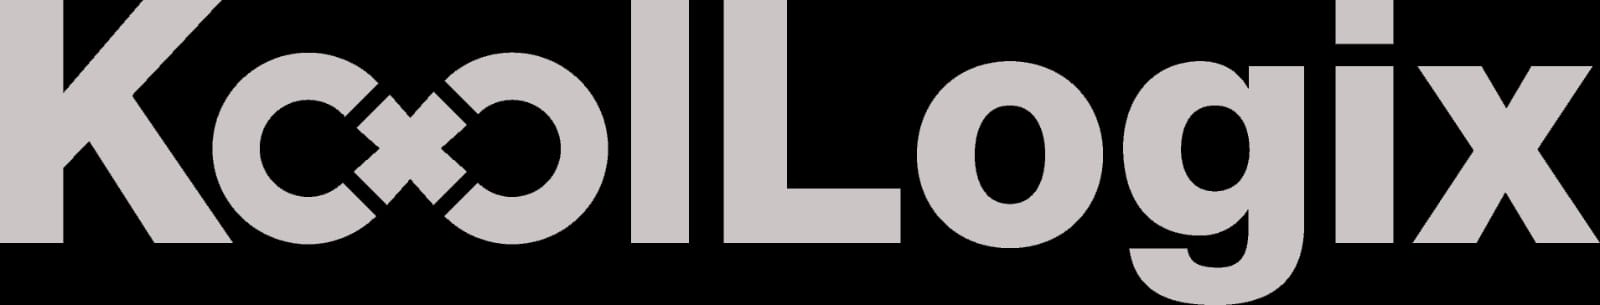 Company logo for Koollogix Pte. Ltd.